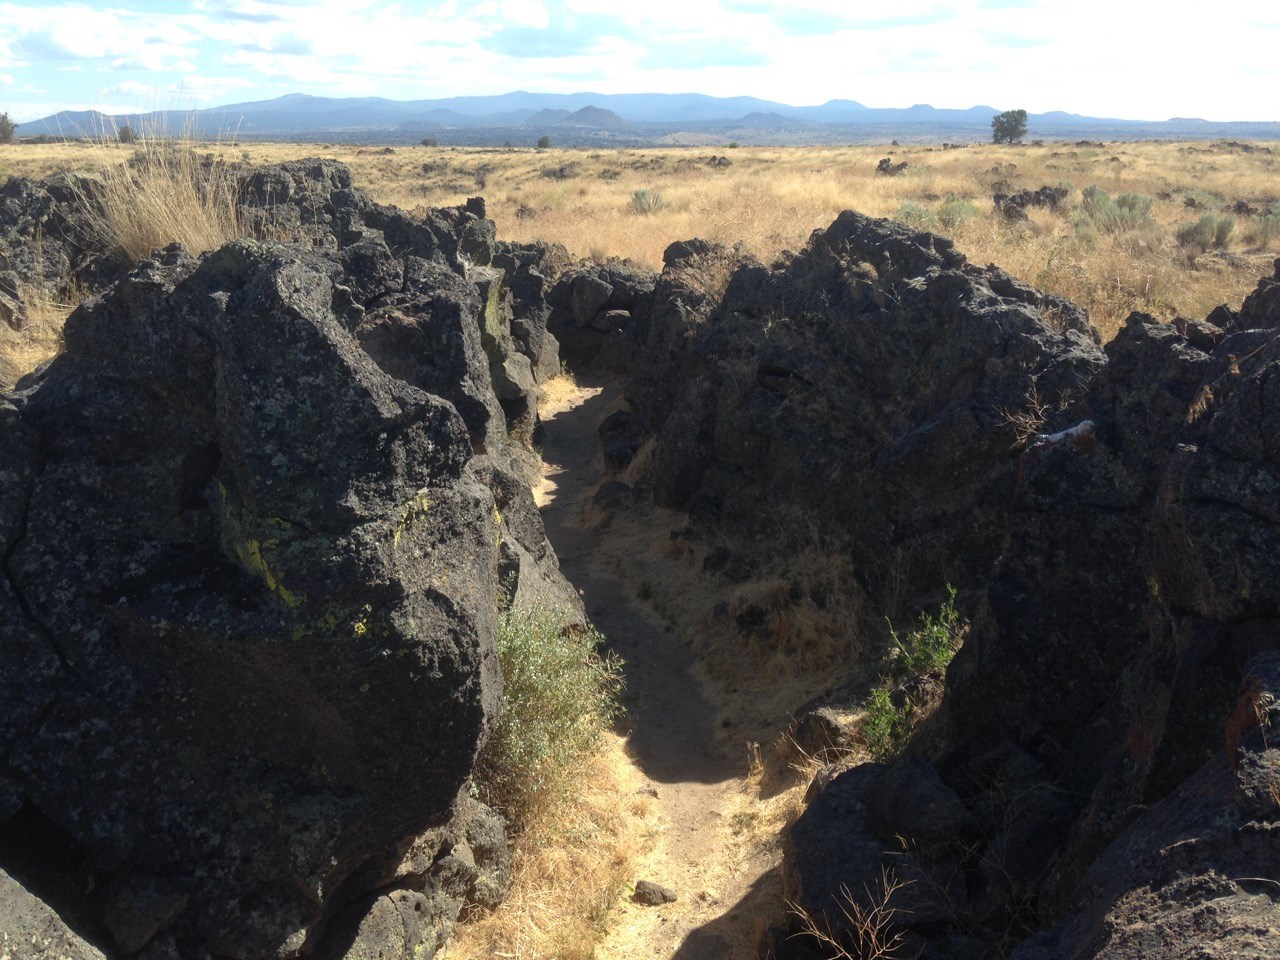 photo of lava rock outcrop and grassy mesa